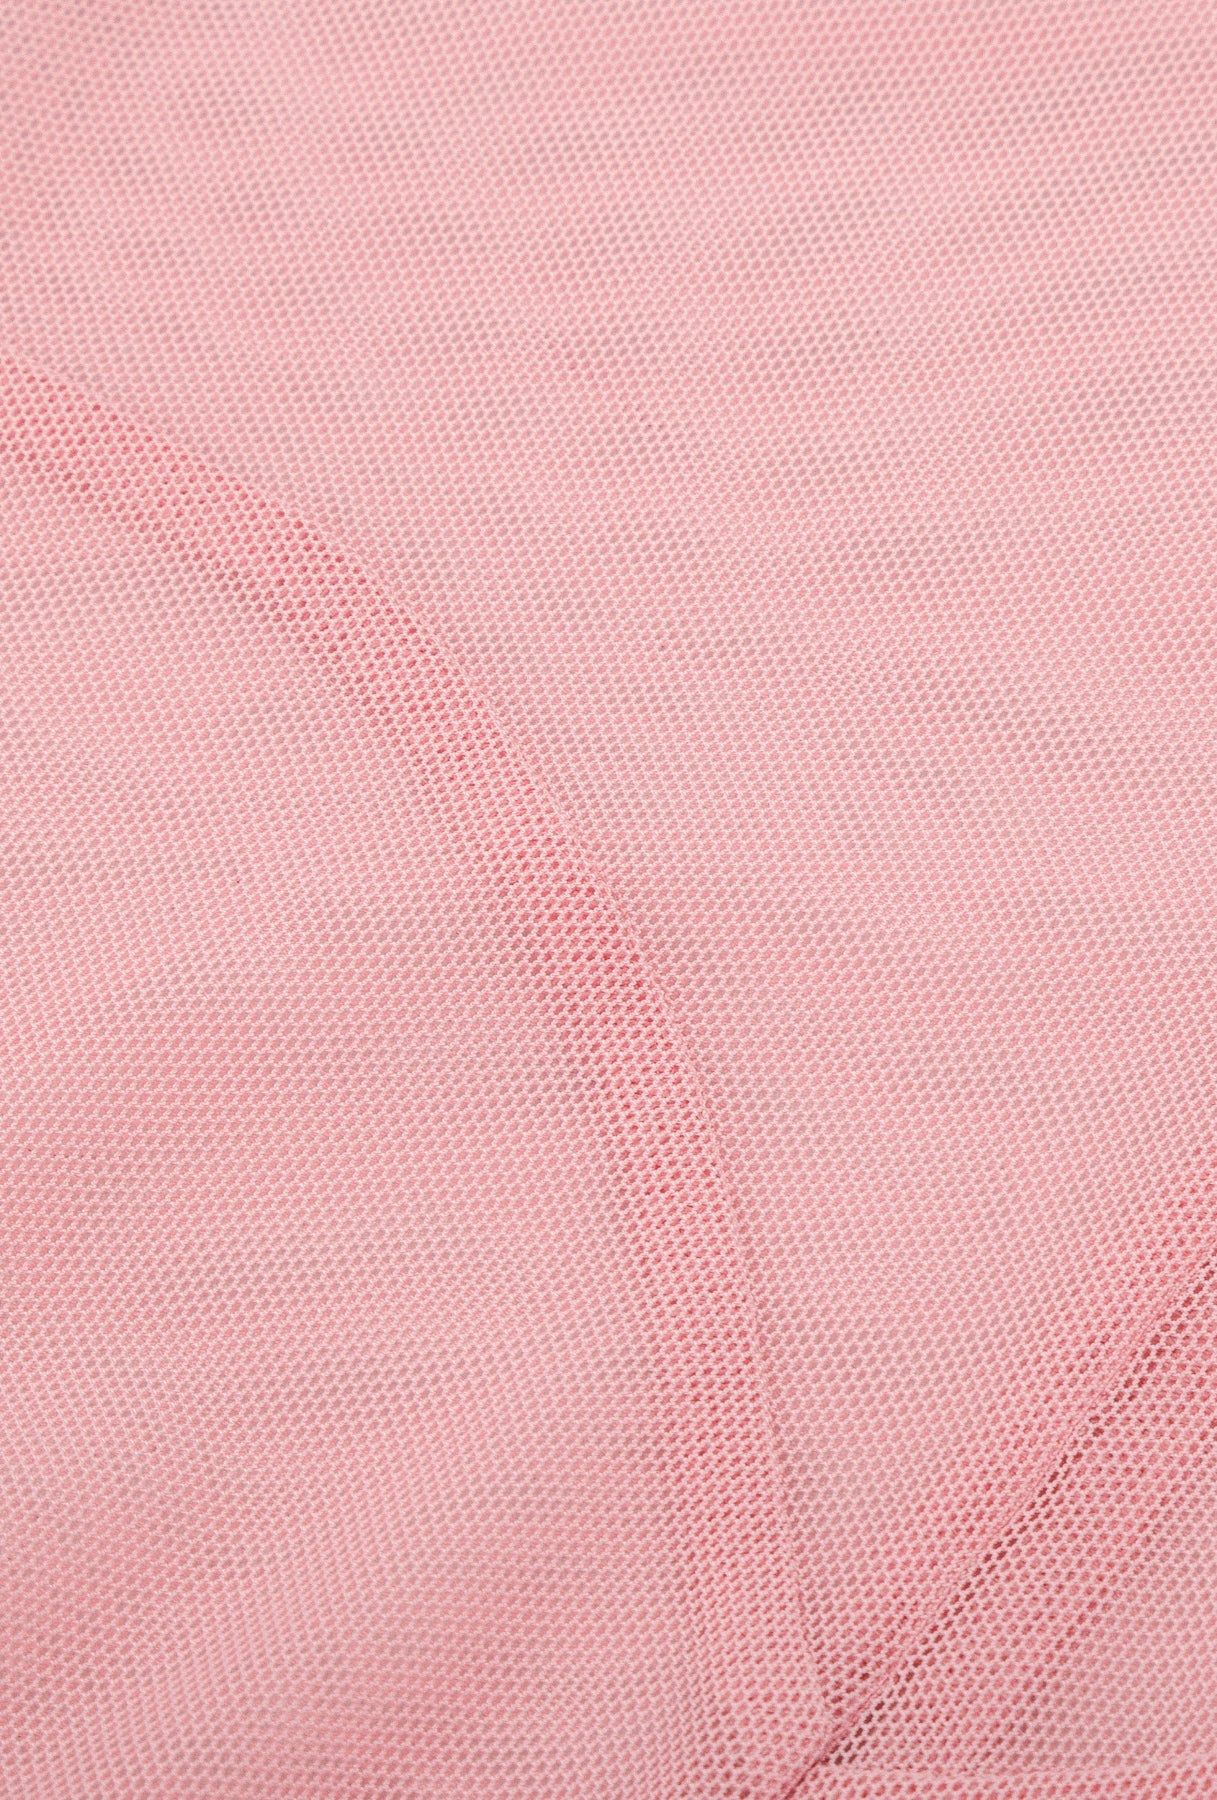 Sheer turtleneck pink